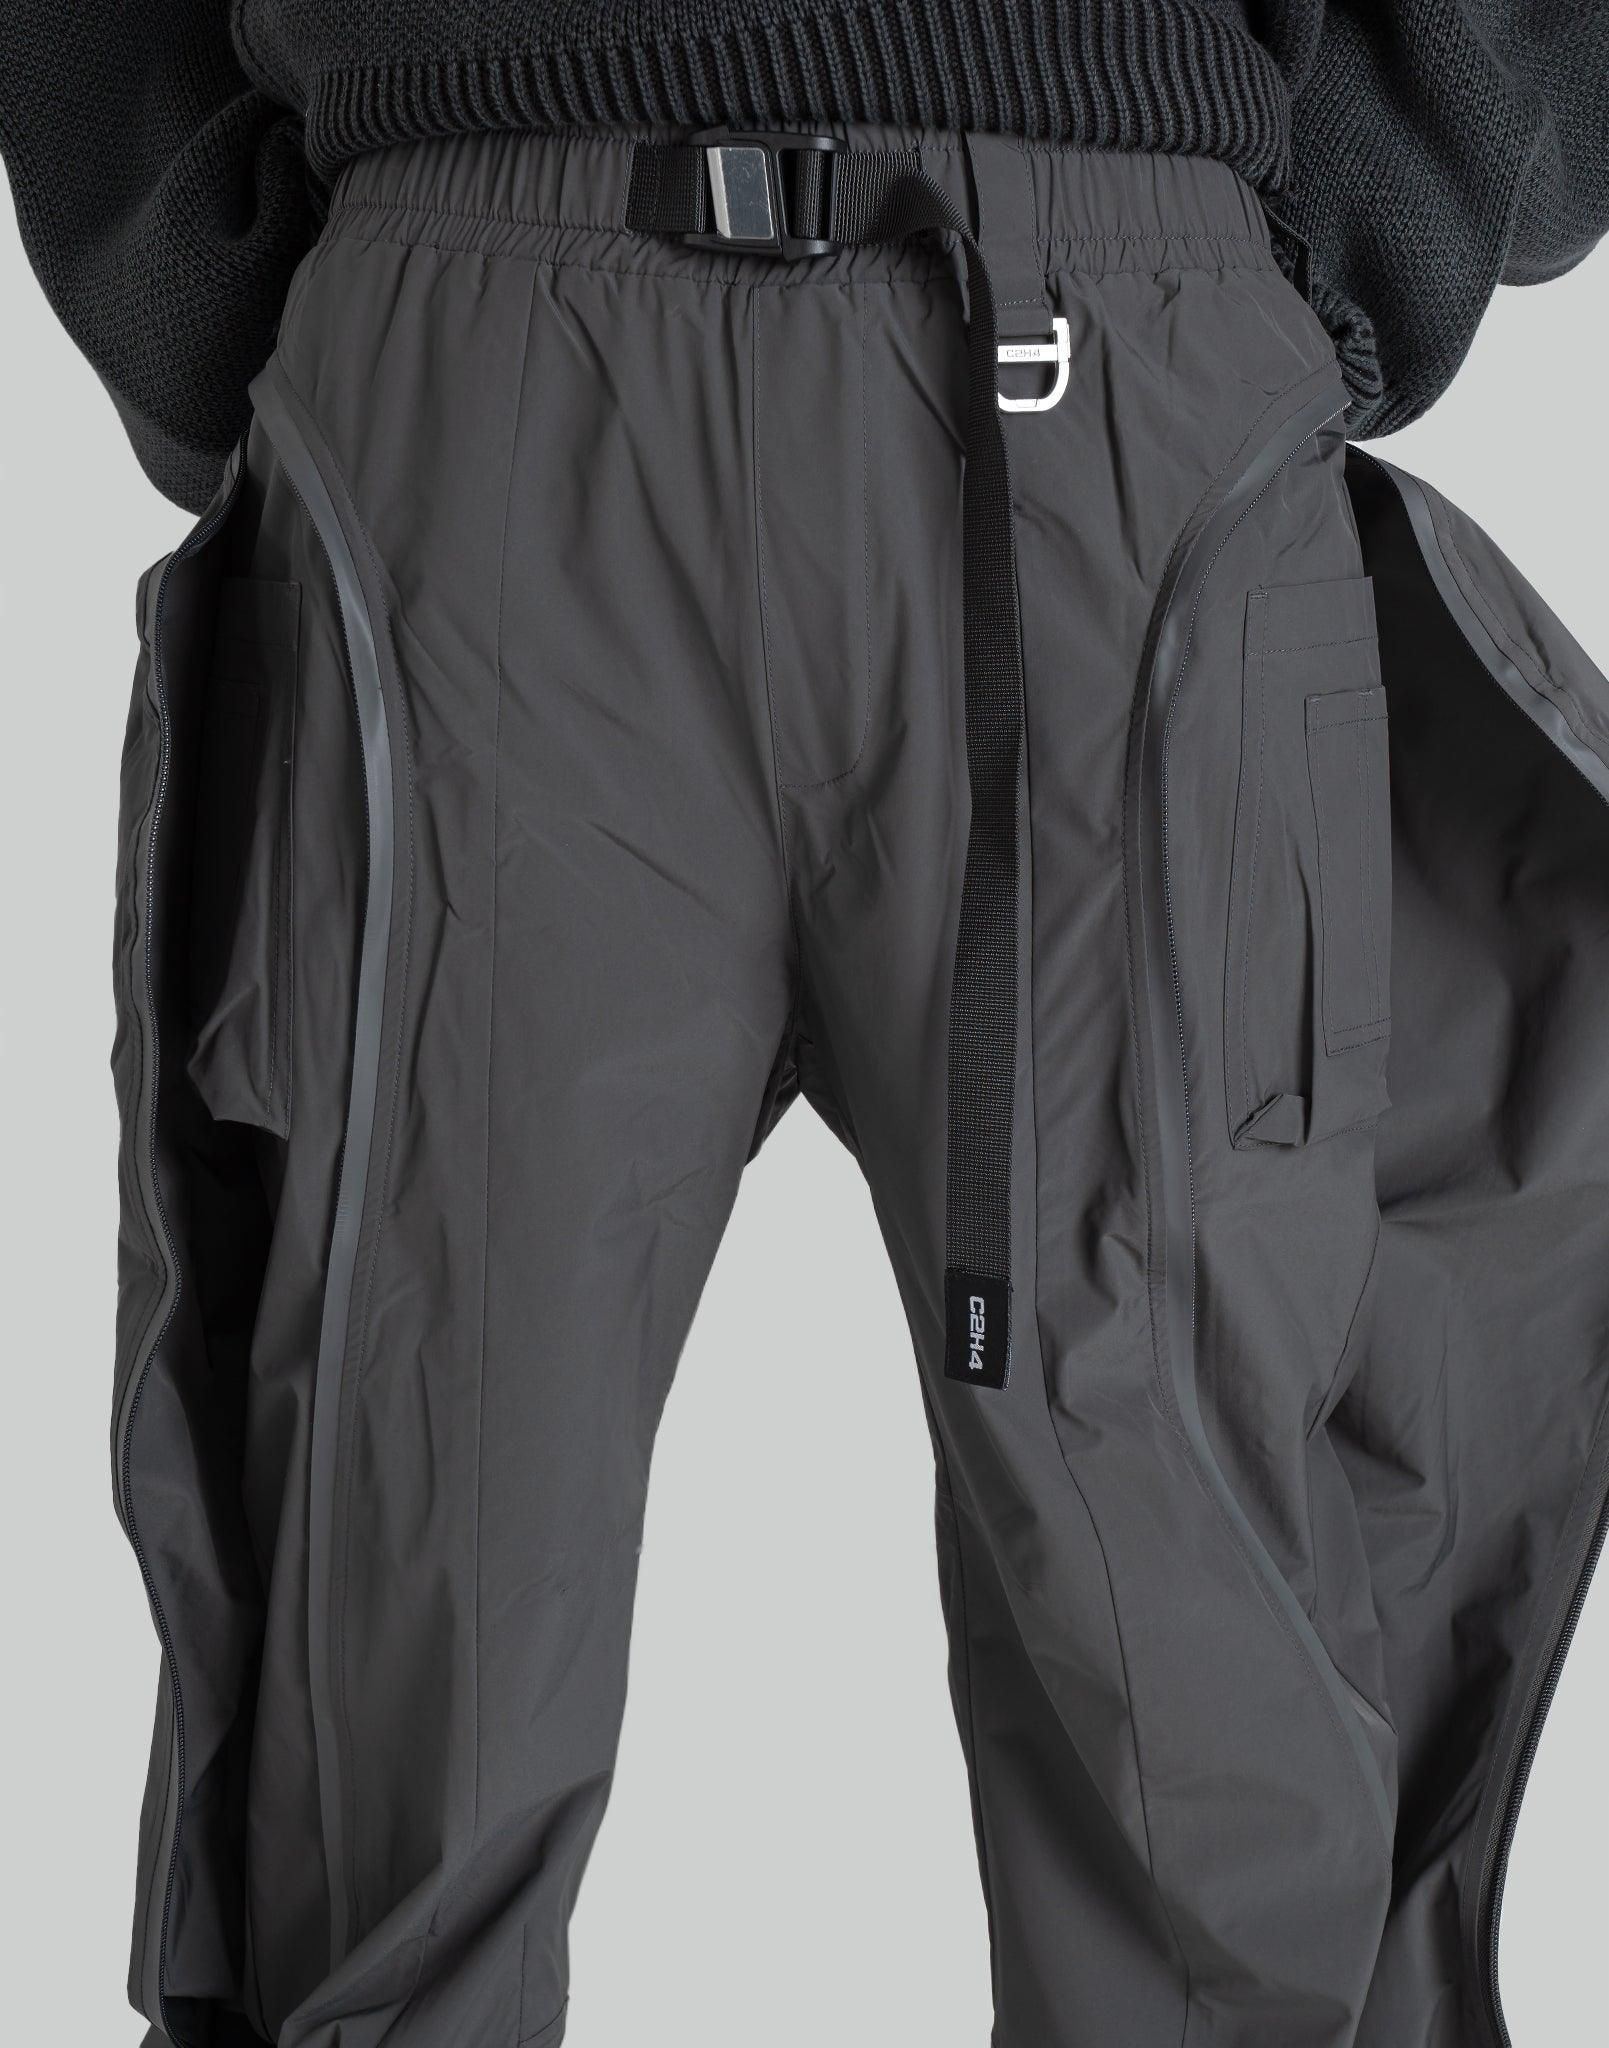 C2H4 Stereoscopic Zippered Ski Pants - 082plus